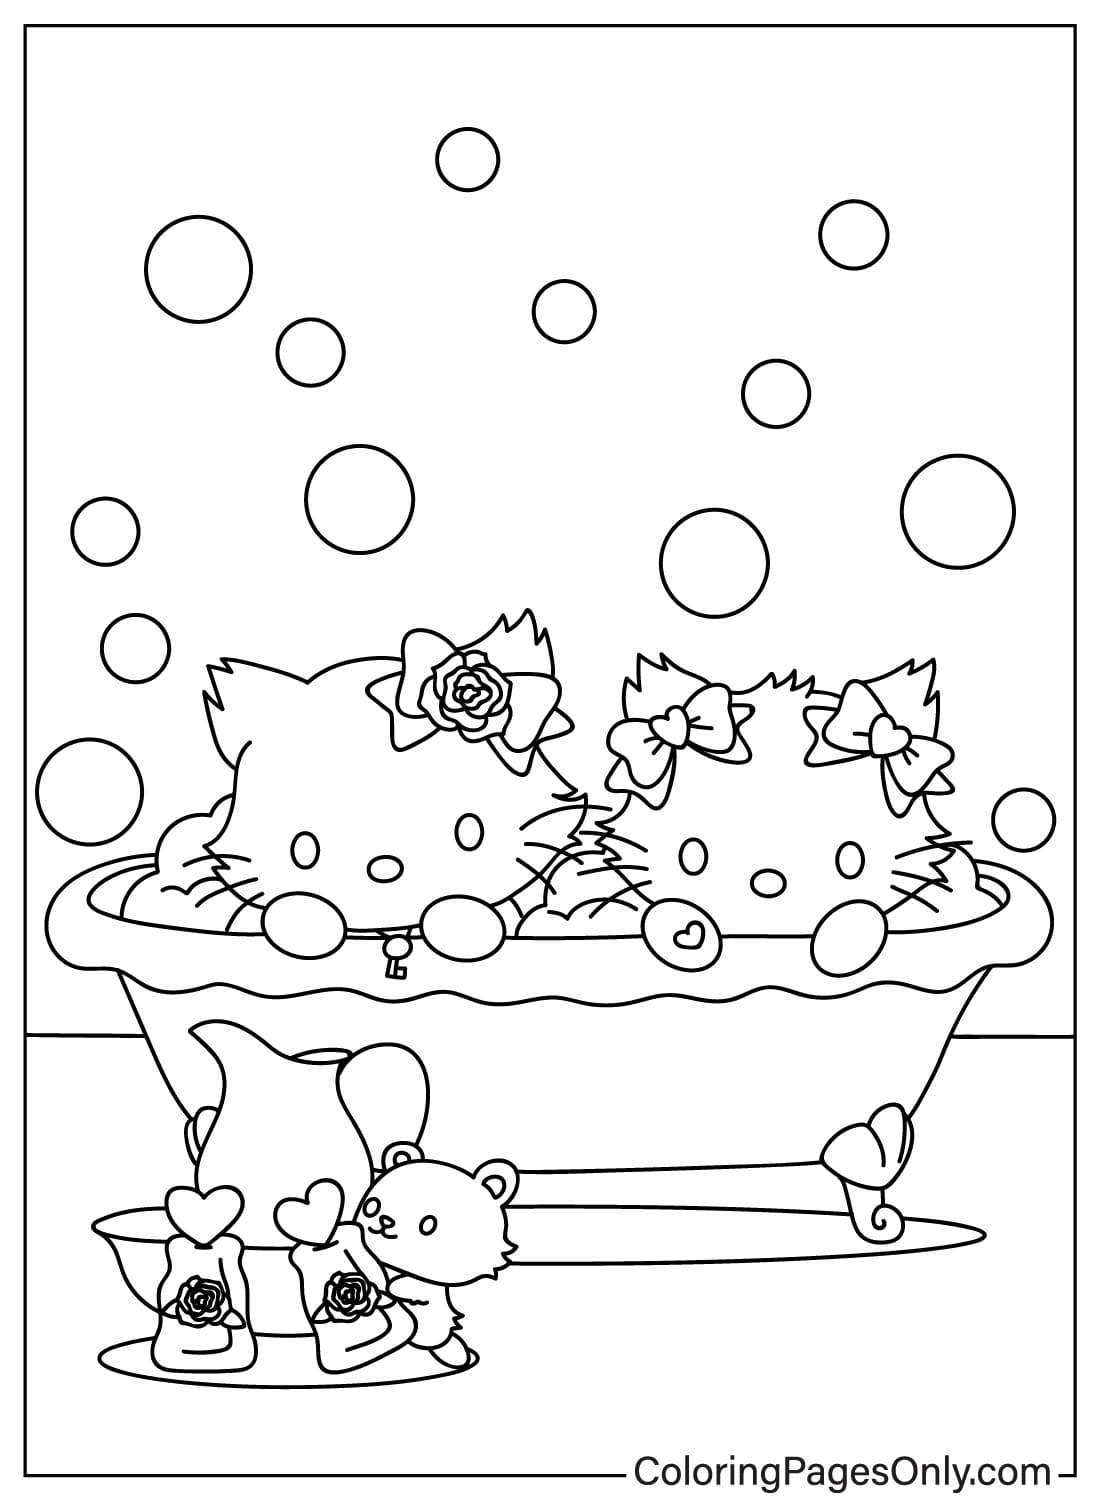 Desenho para colorir de Charmmy Kitty tomando banho de Charmmy Kitty